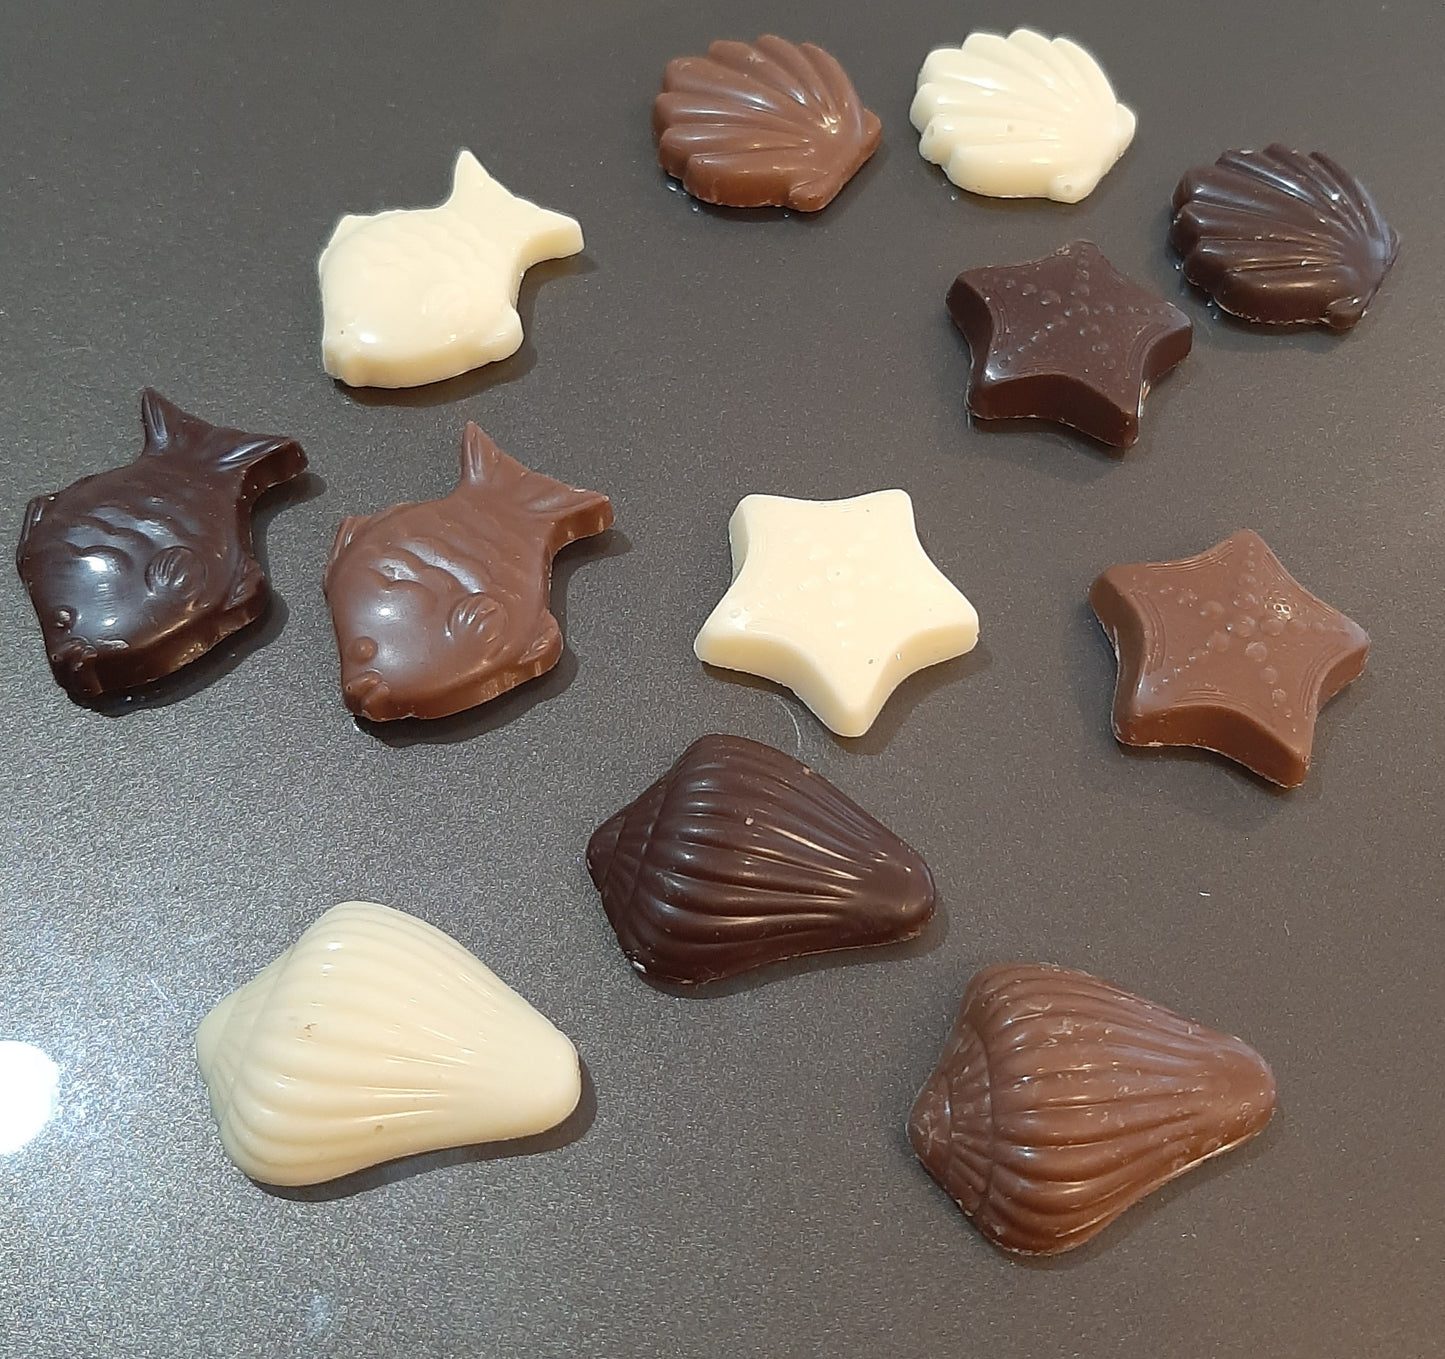 Sea Buddies – Assorted Chocolate Bitsy Bites 3.53 Oz (100 g)